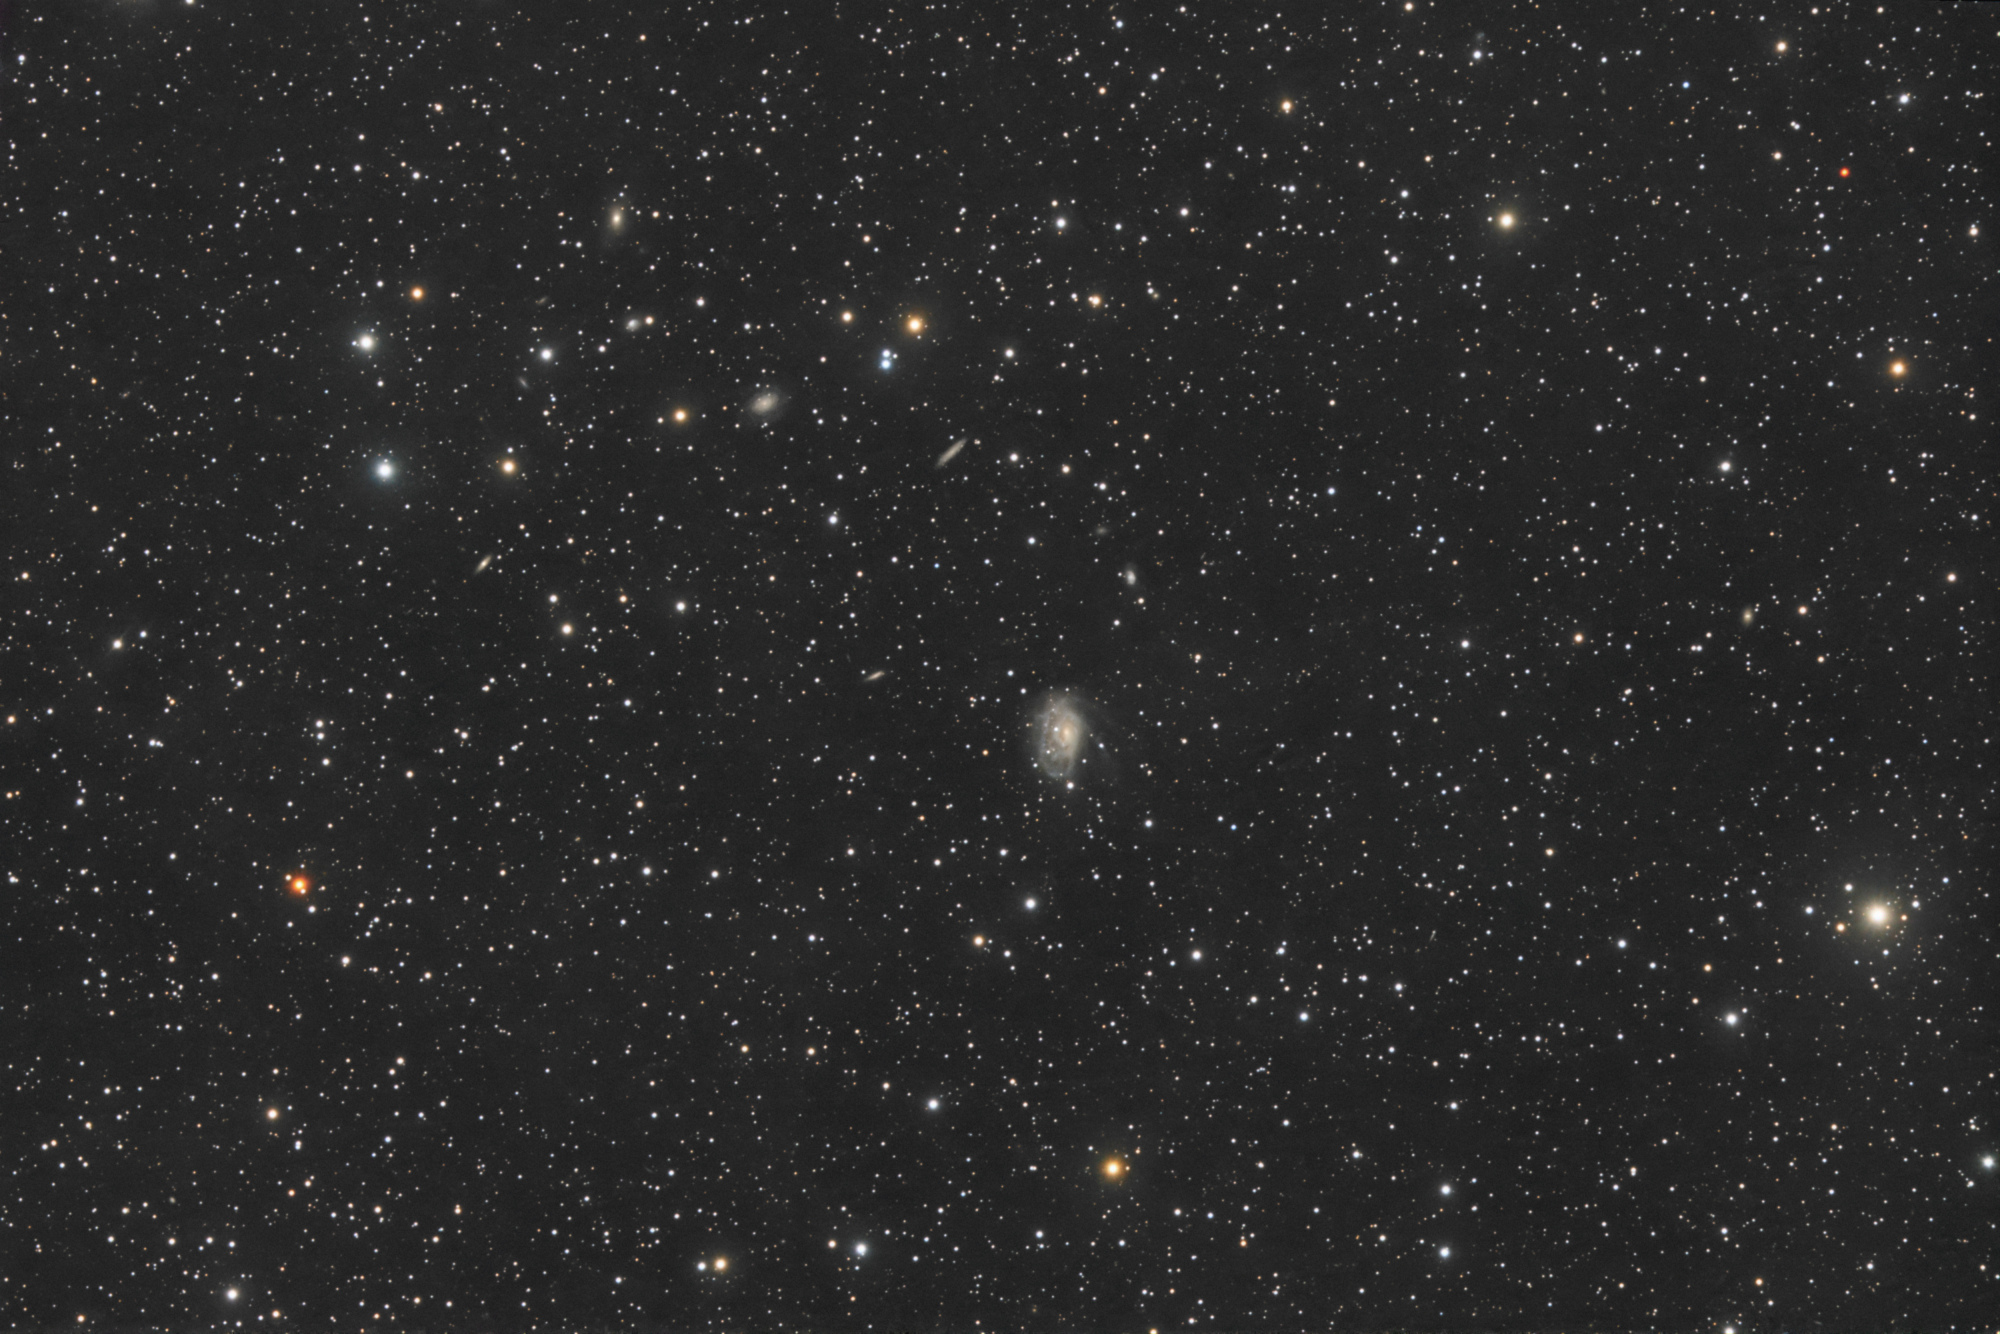 NGC 1961_SIRIL-L1+2-iris-b-étir-cs5-4-FINAL-2-x.jpg